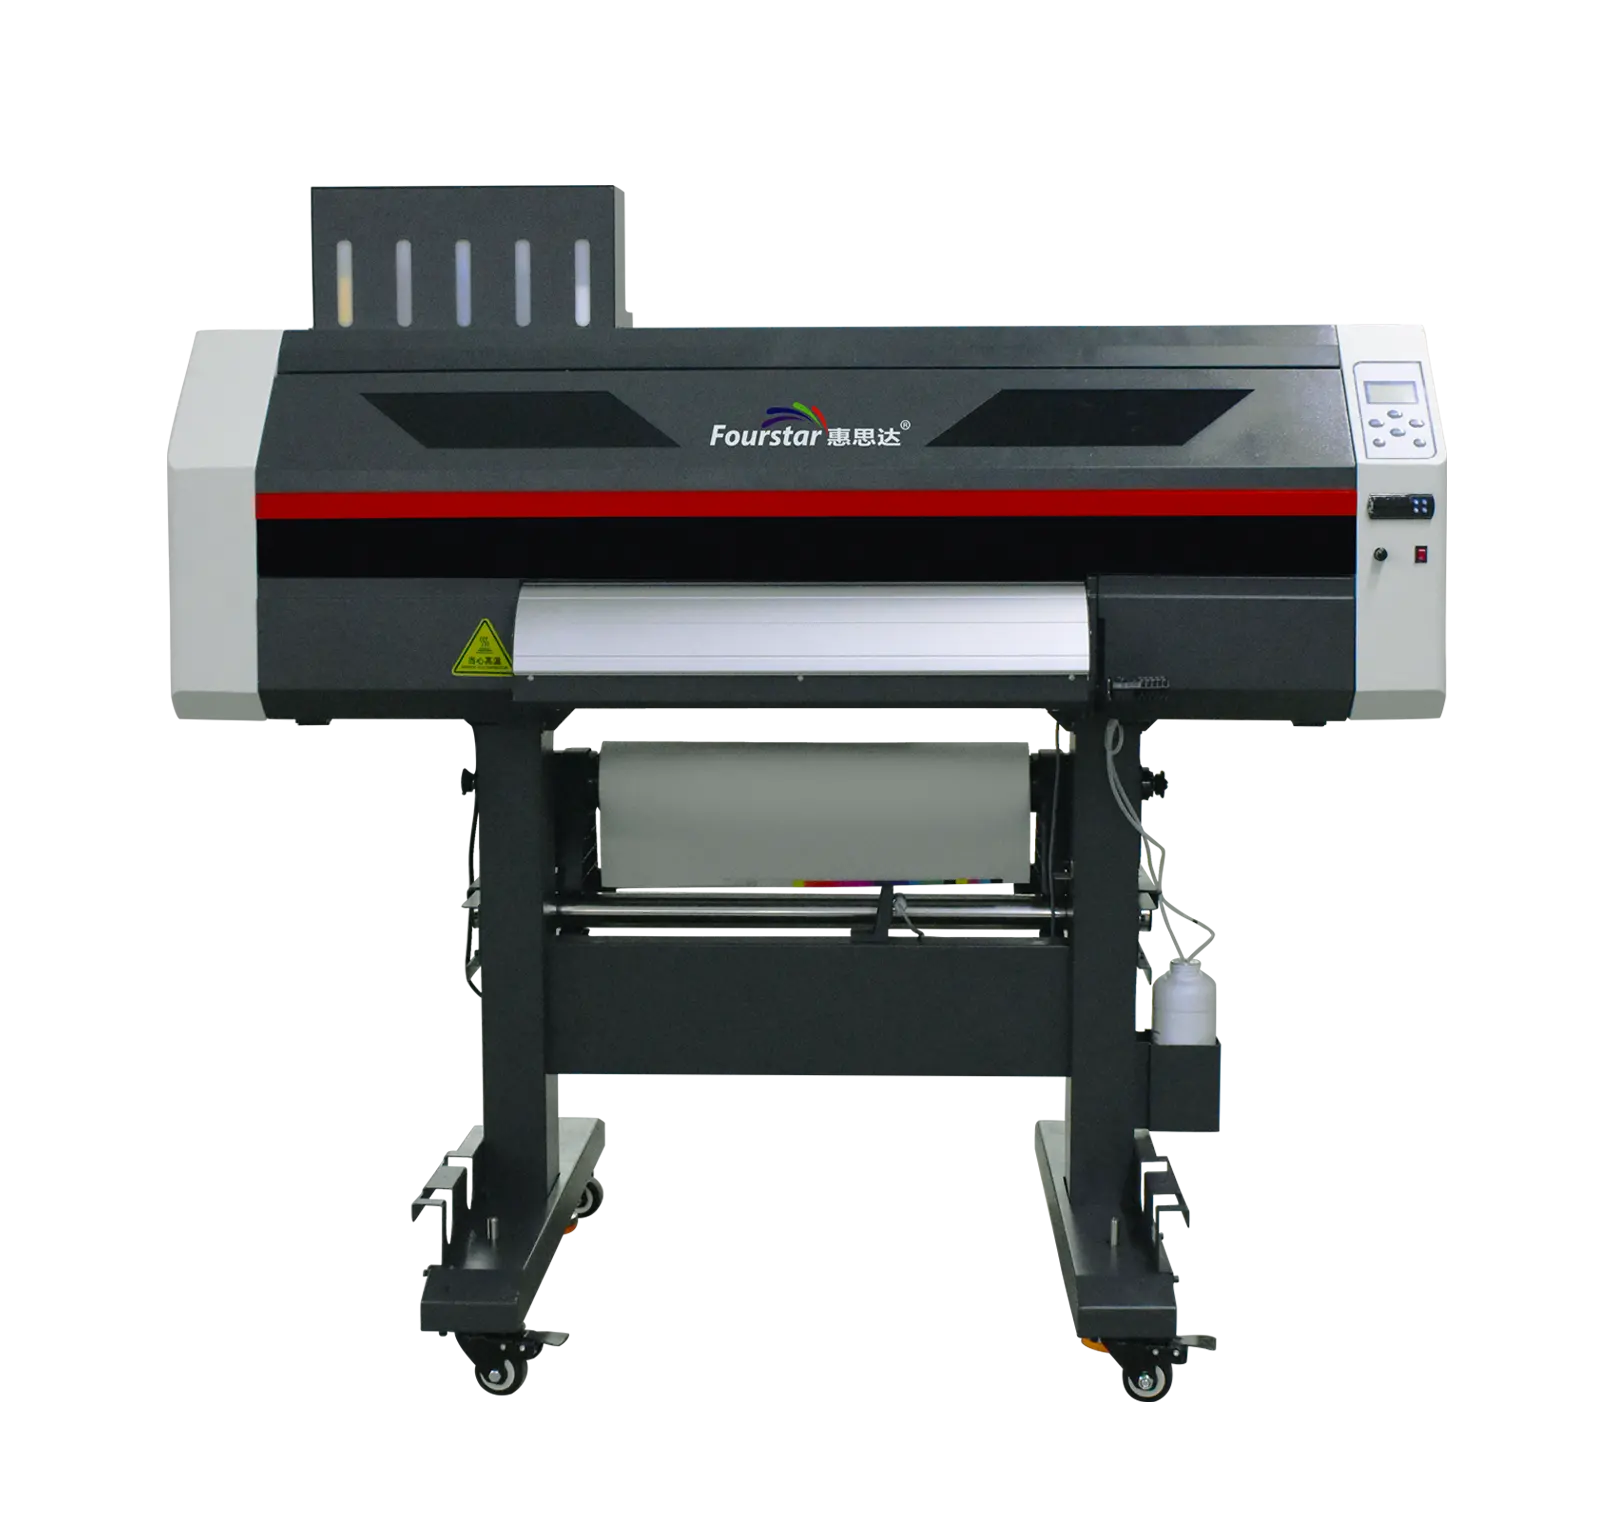 High quality Fourstar 60cm width dtf printer with h650 powder shaking machine hoson board epson i3200 dual Nozzles